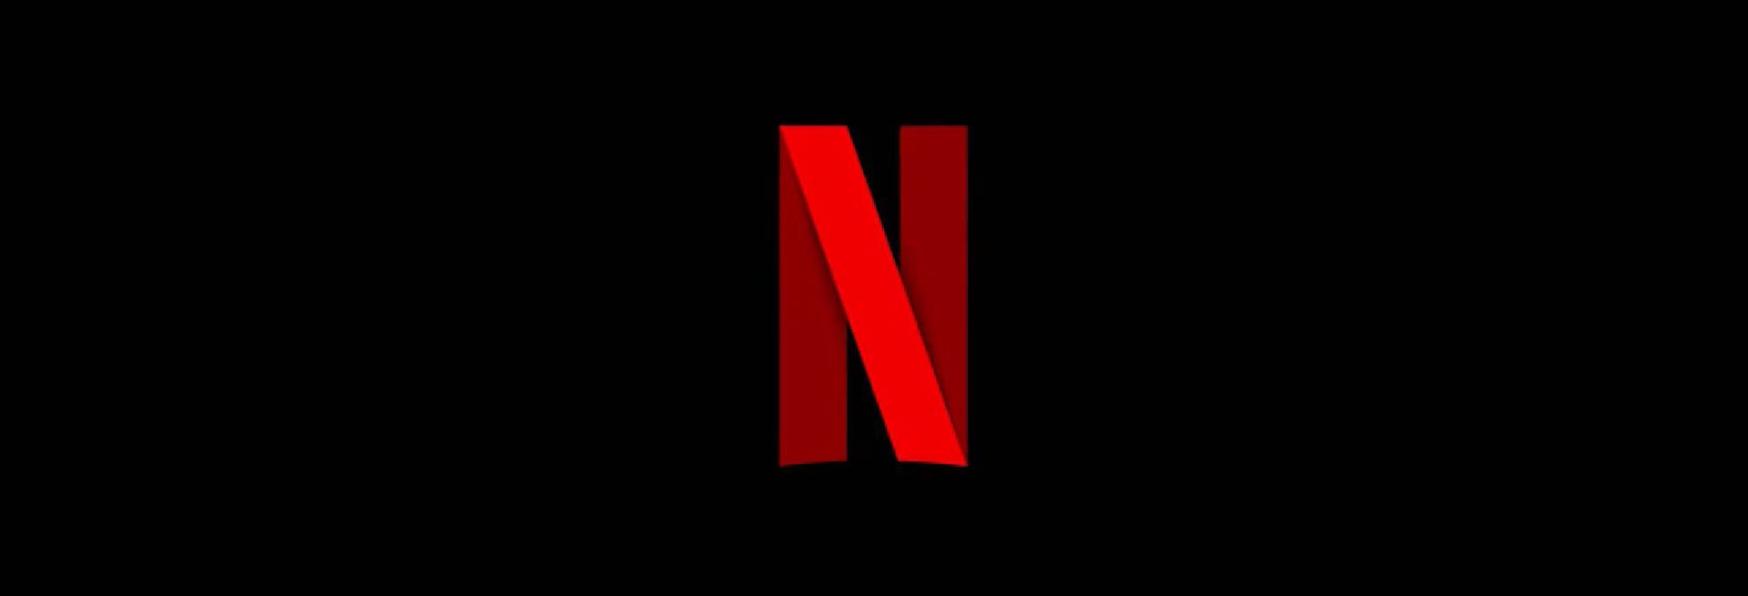 Netflix: Latest Updates on Blocking Password Sharing